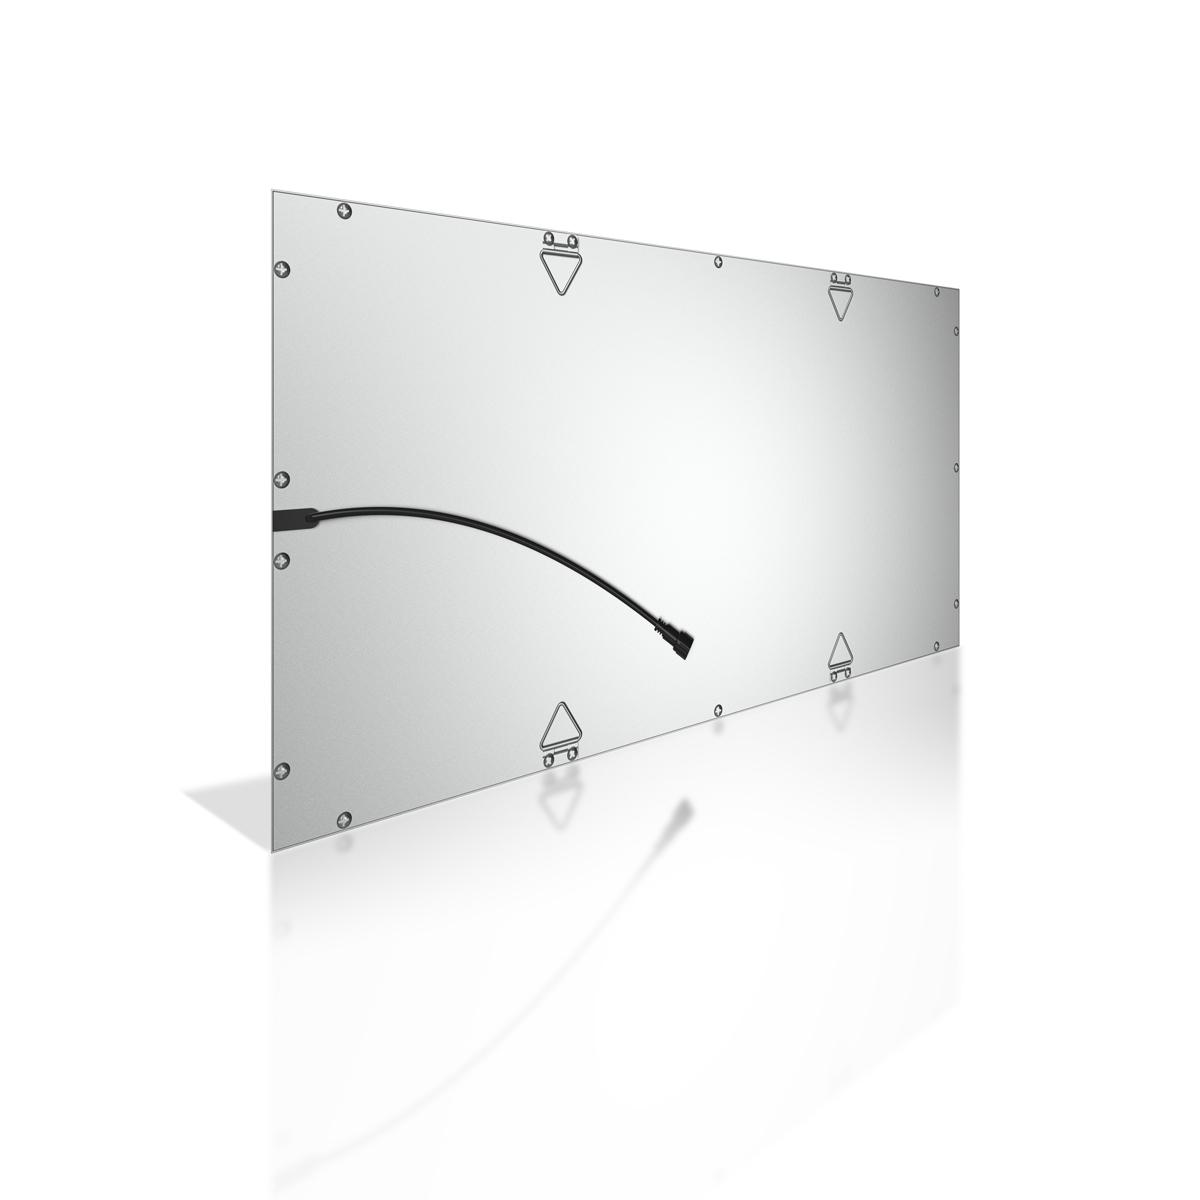 LED Panel 60x30cm 24W Rahmen silbern - Lichtfarbe: CCT 3000K-6000K